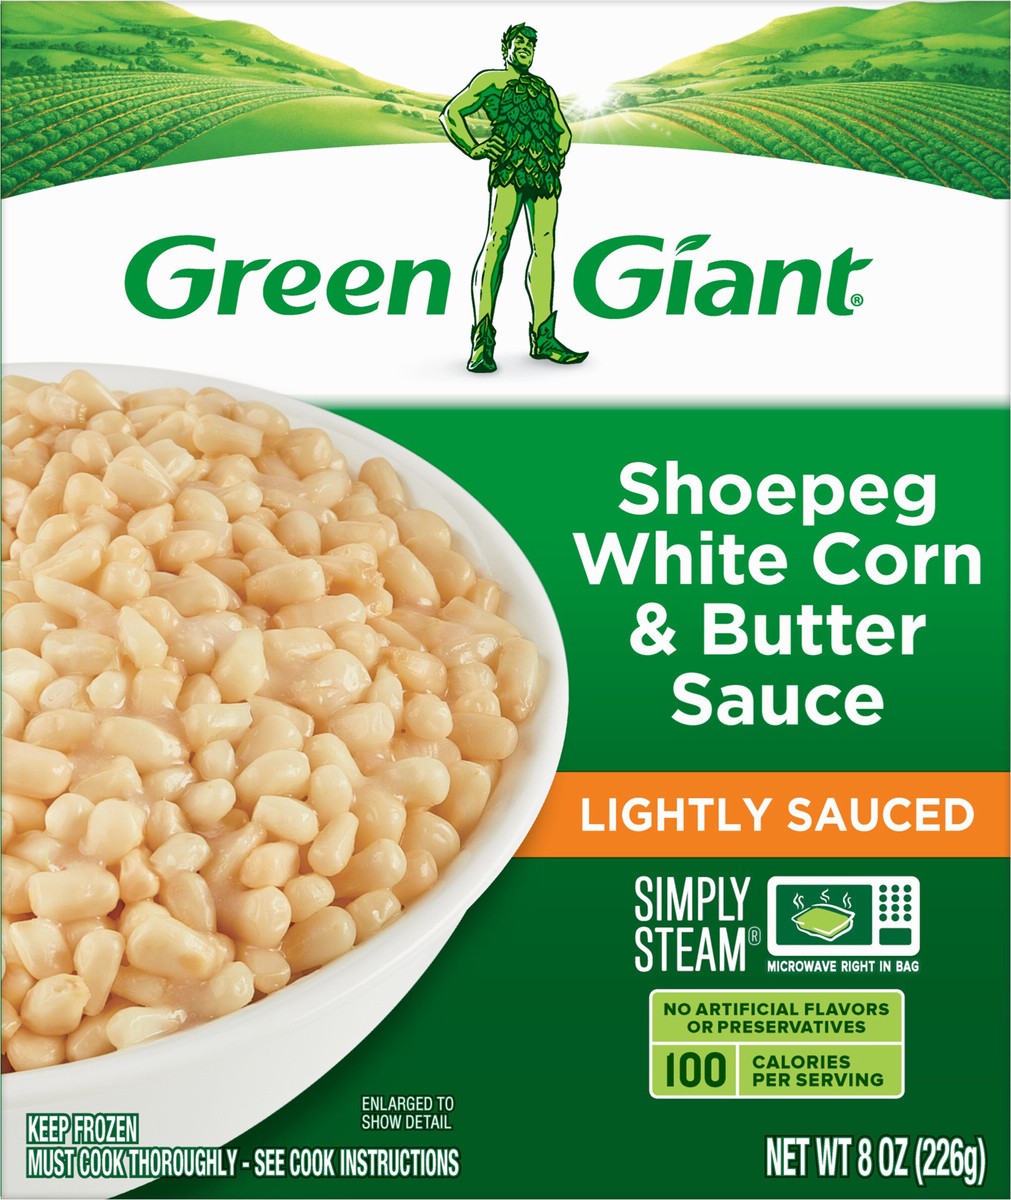 slide 6 of 9, Green Giant Simply Steam Shoepeg White Corn & Butter Sauce, Lightly Sauced Frozen Vegetables, 8 OZ, 8 oz